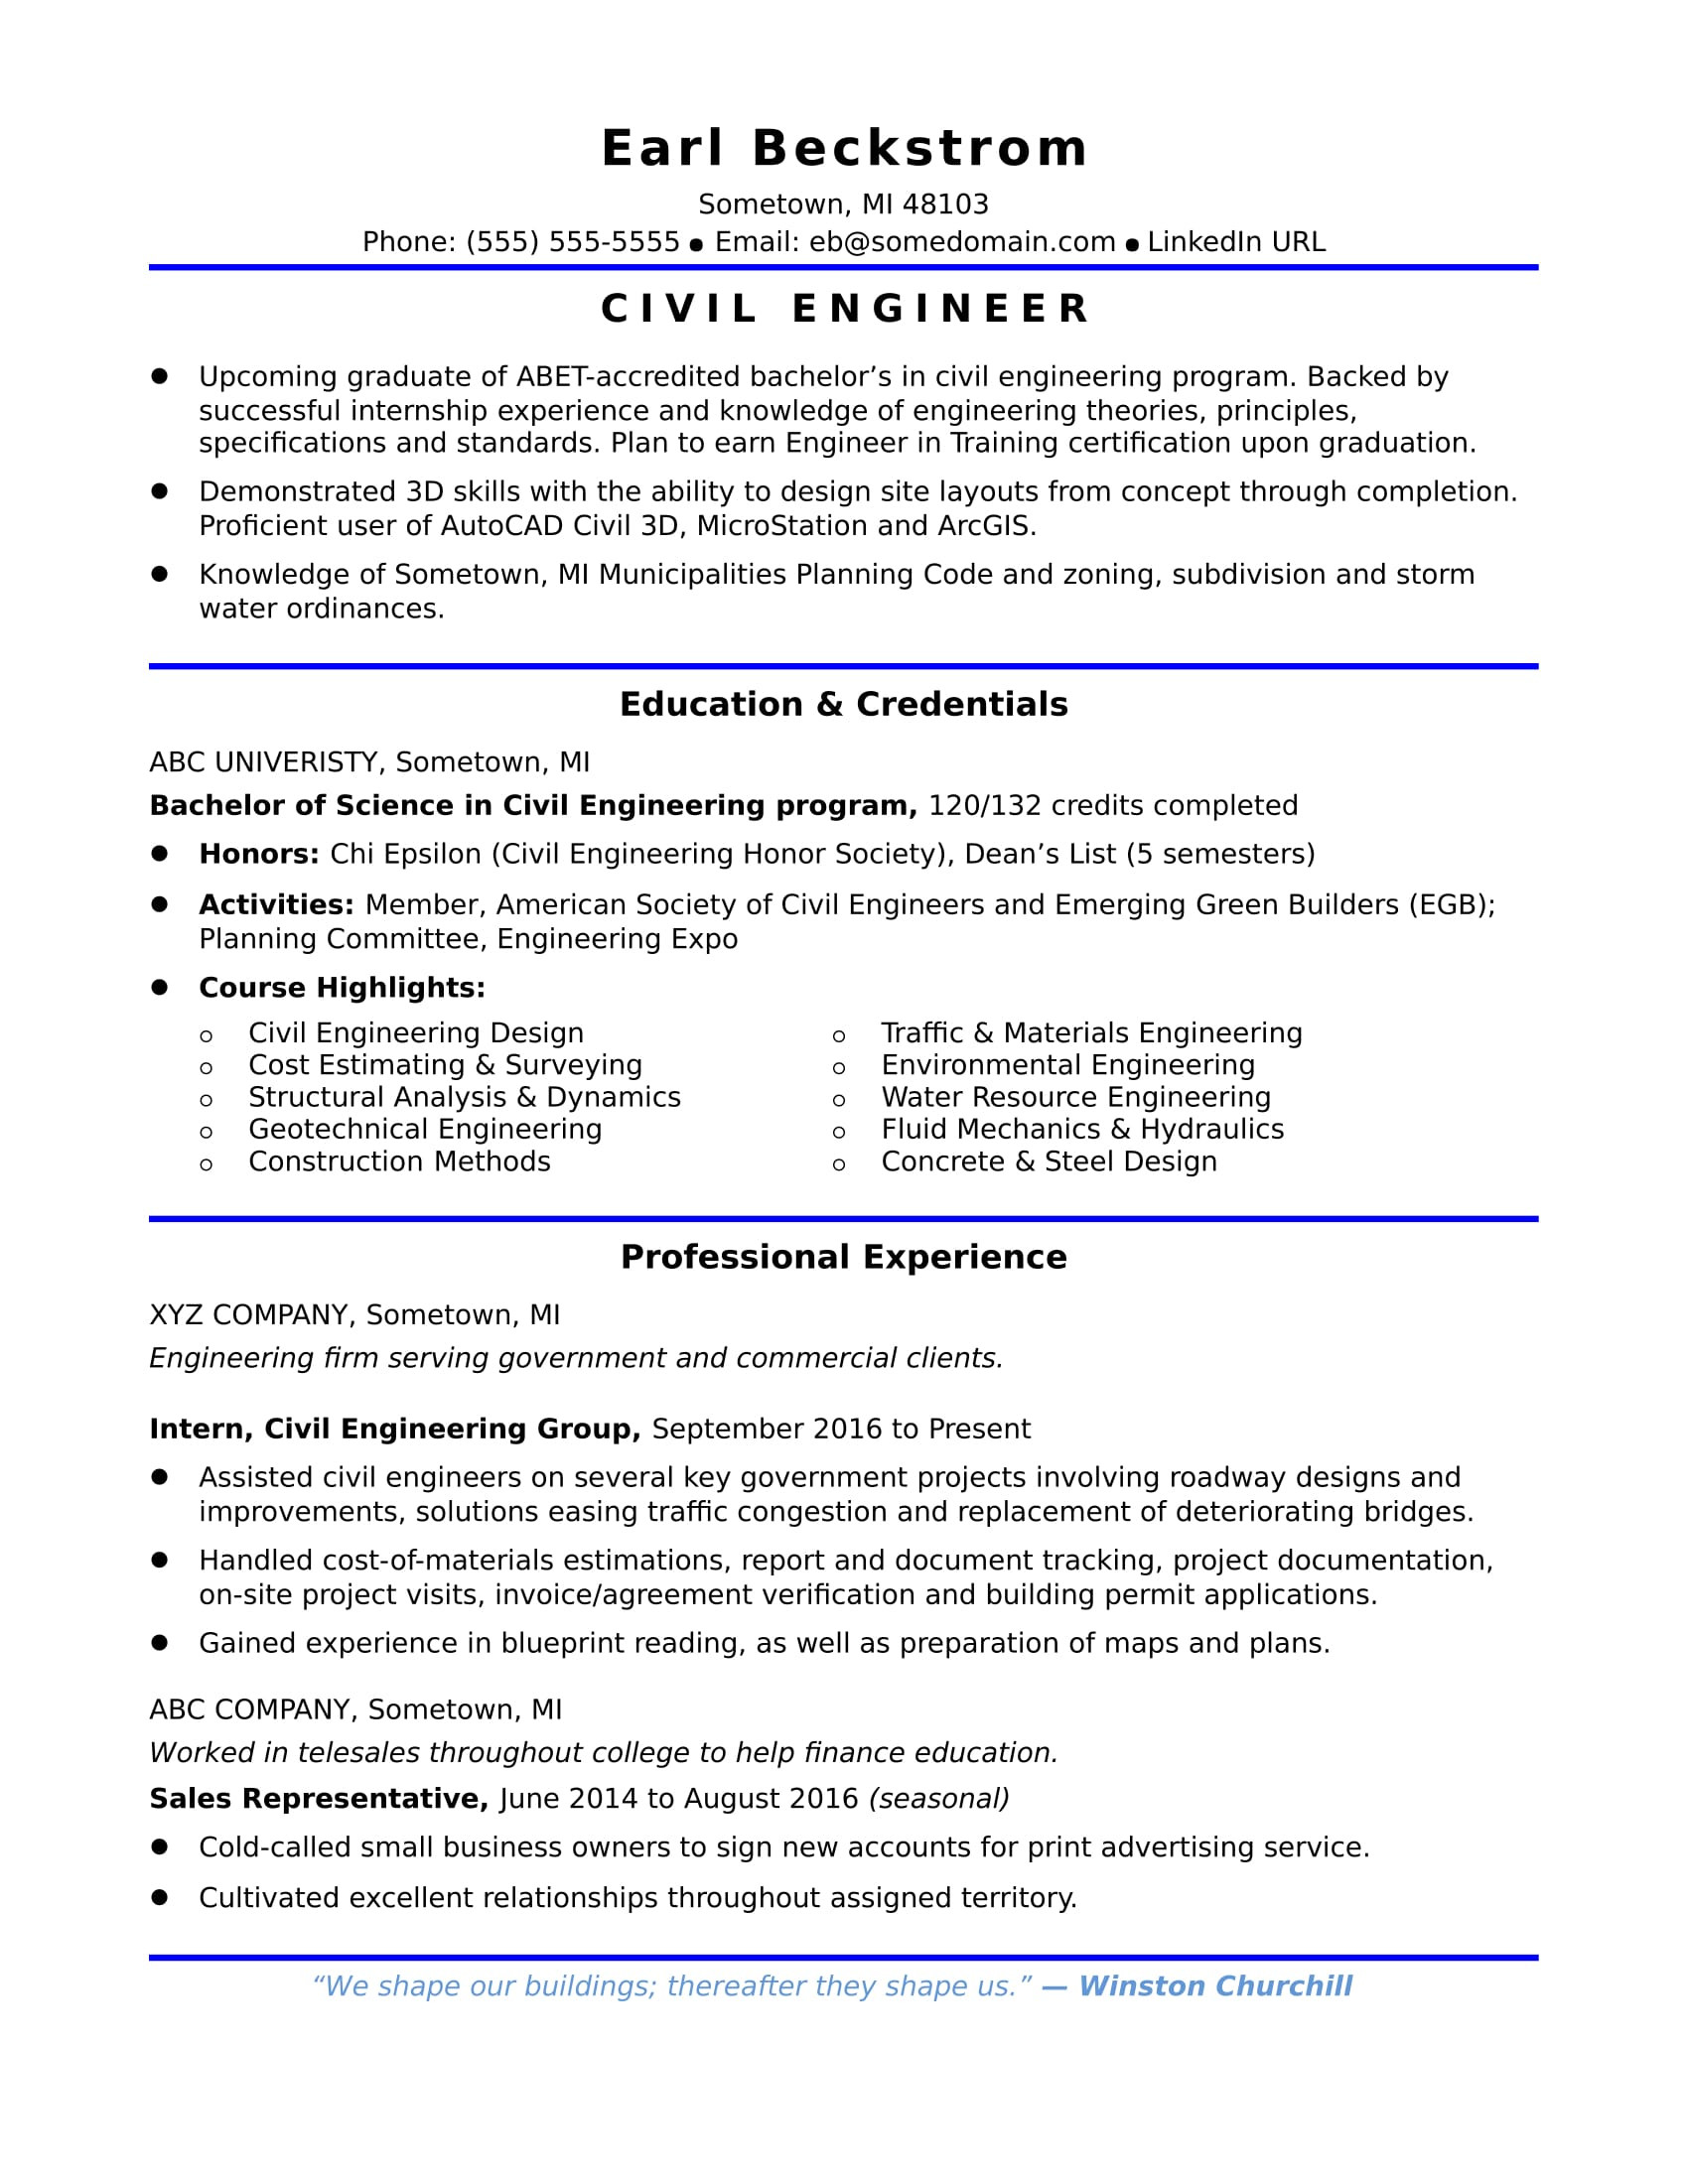 Entry Level Civil Engineer Resume Sample Sample Resume for An Entry-level Civil Engineer Monster.com